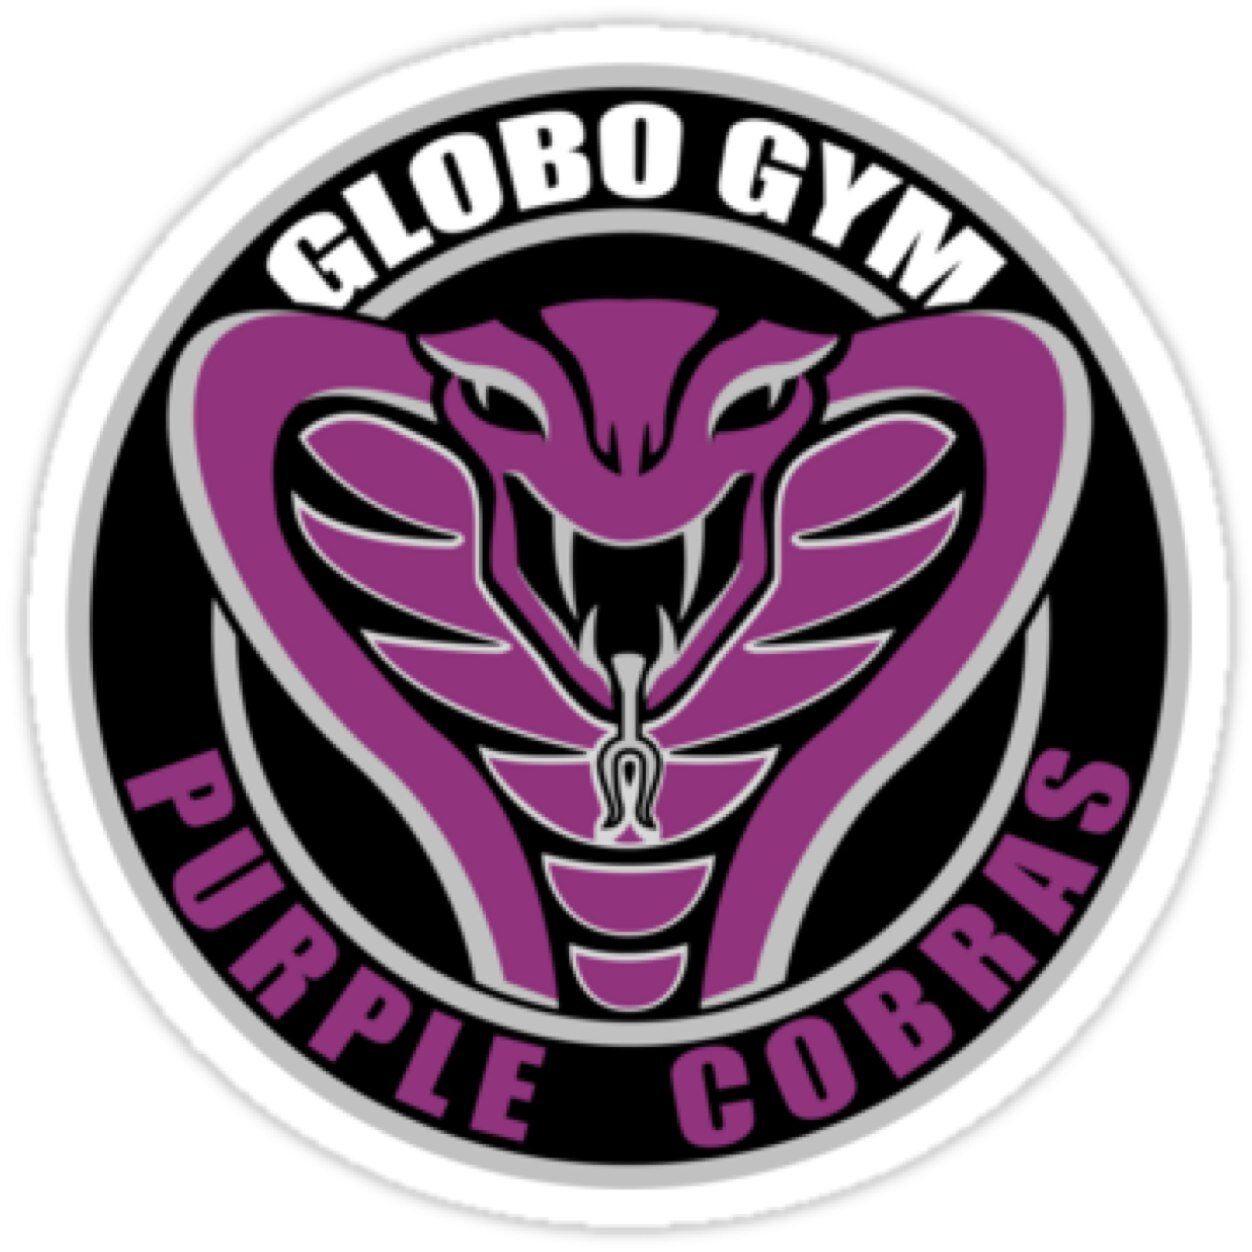 Cool Fake Company Logo - Dodgeball globo gym Logos